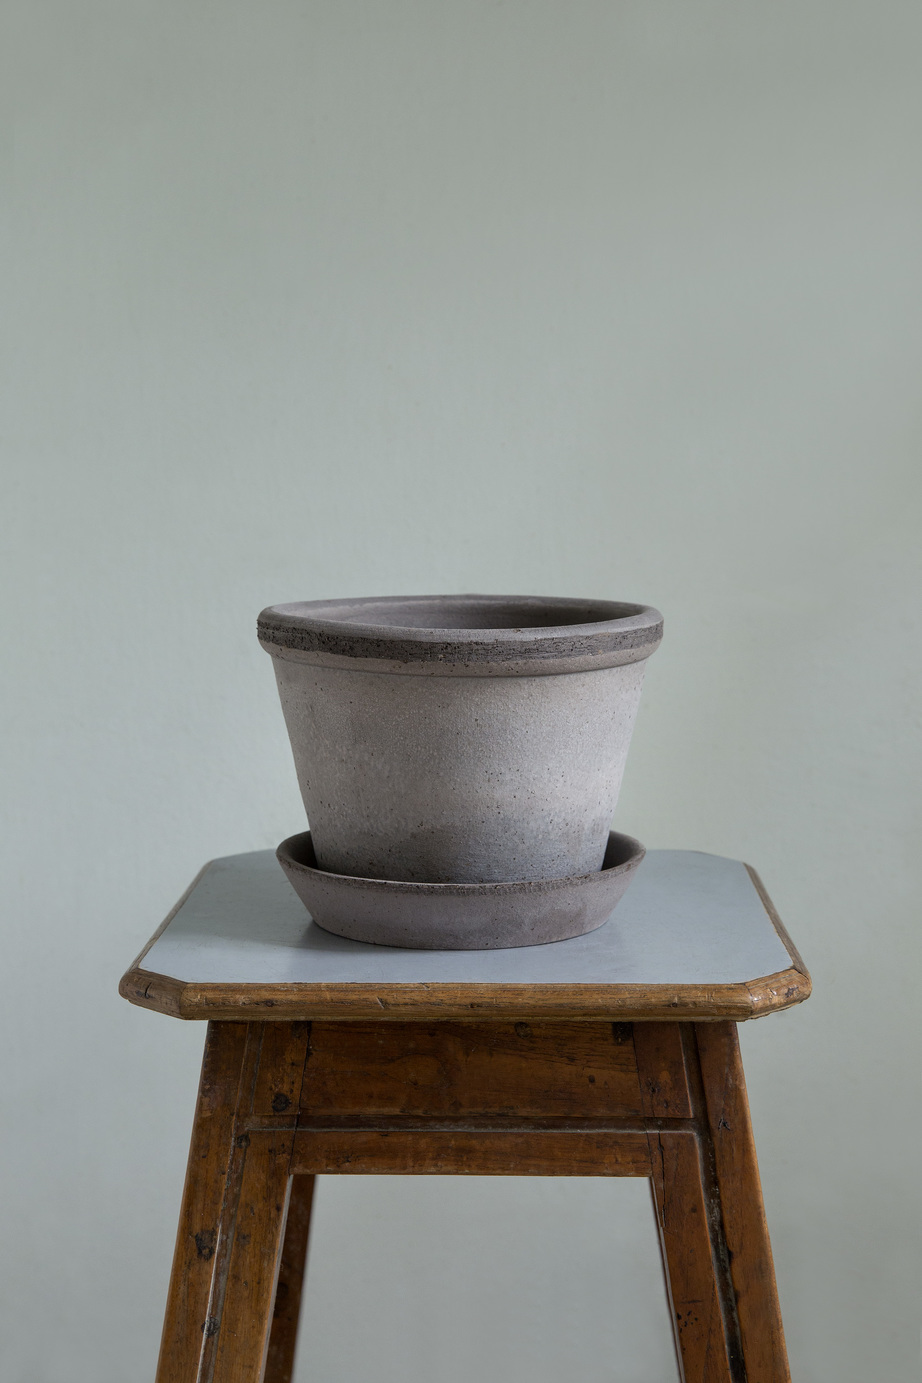 Raw grey pot with saucer on a stool.